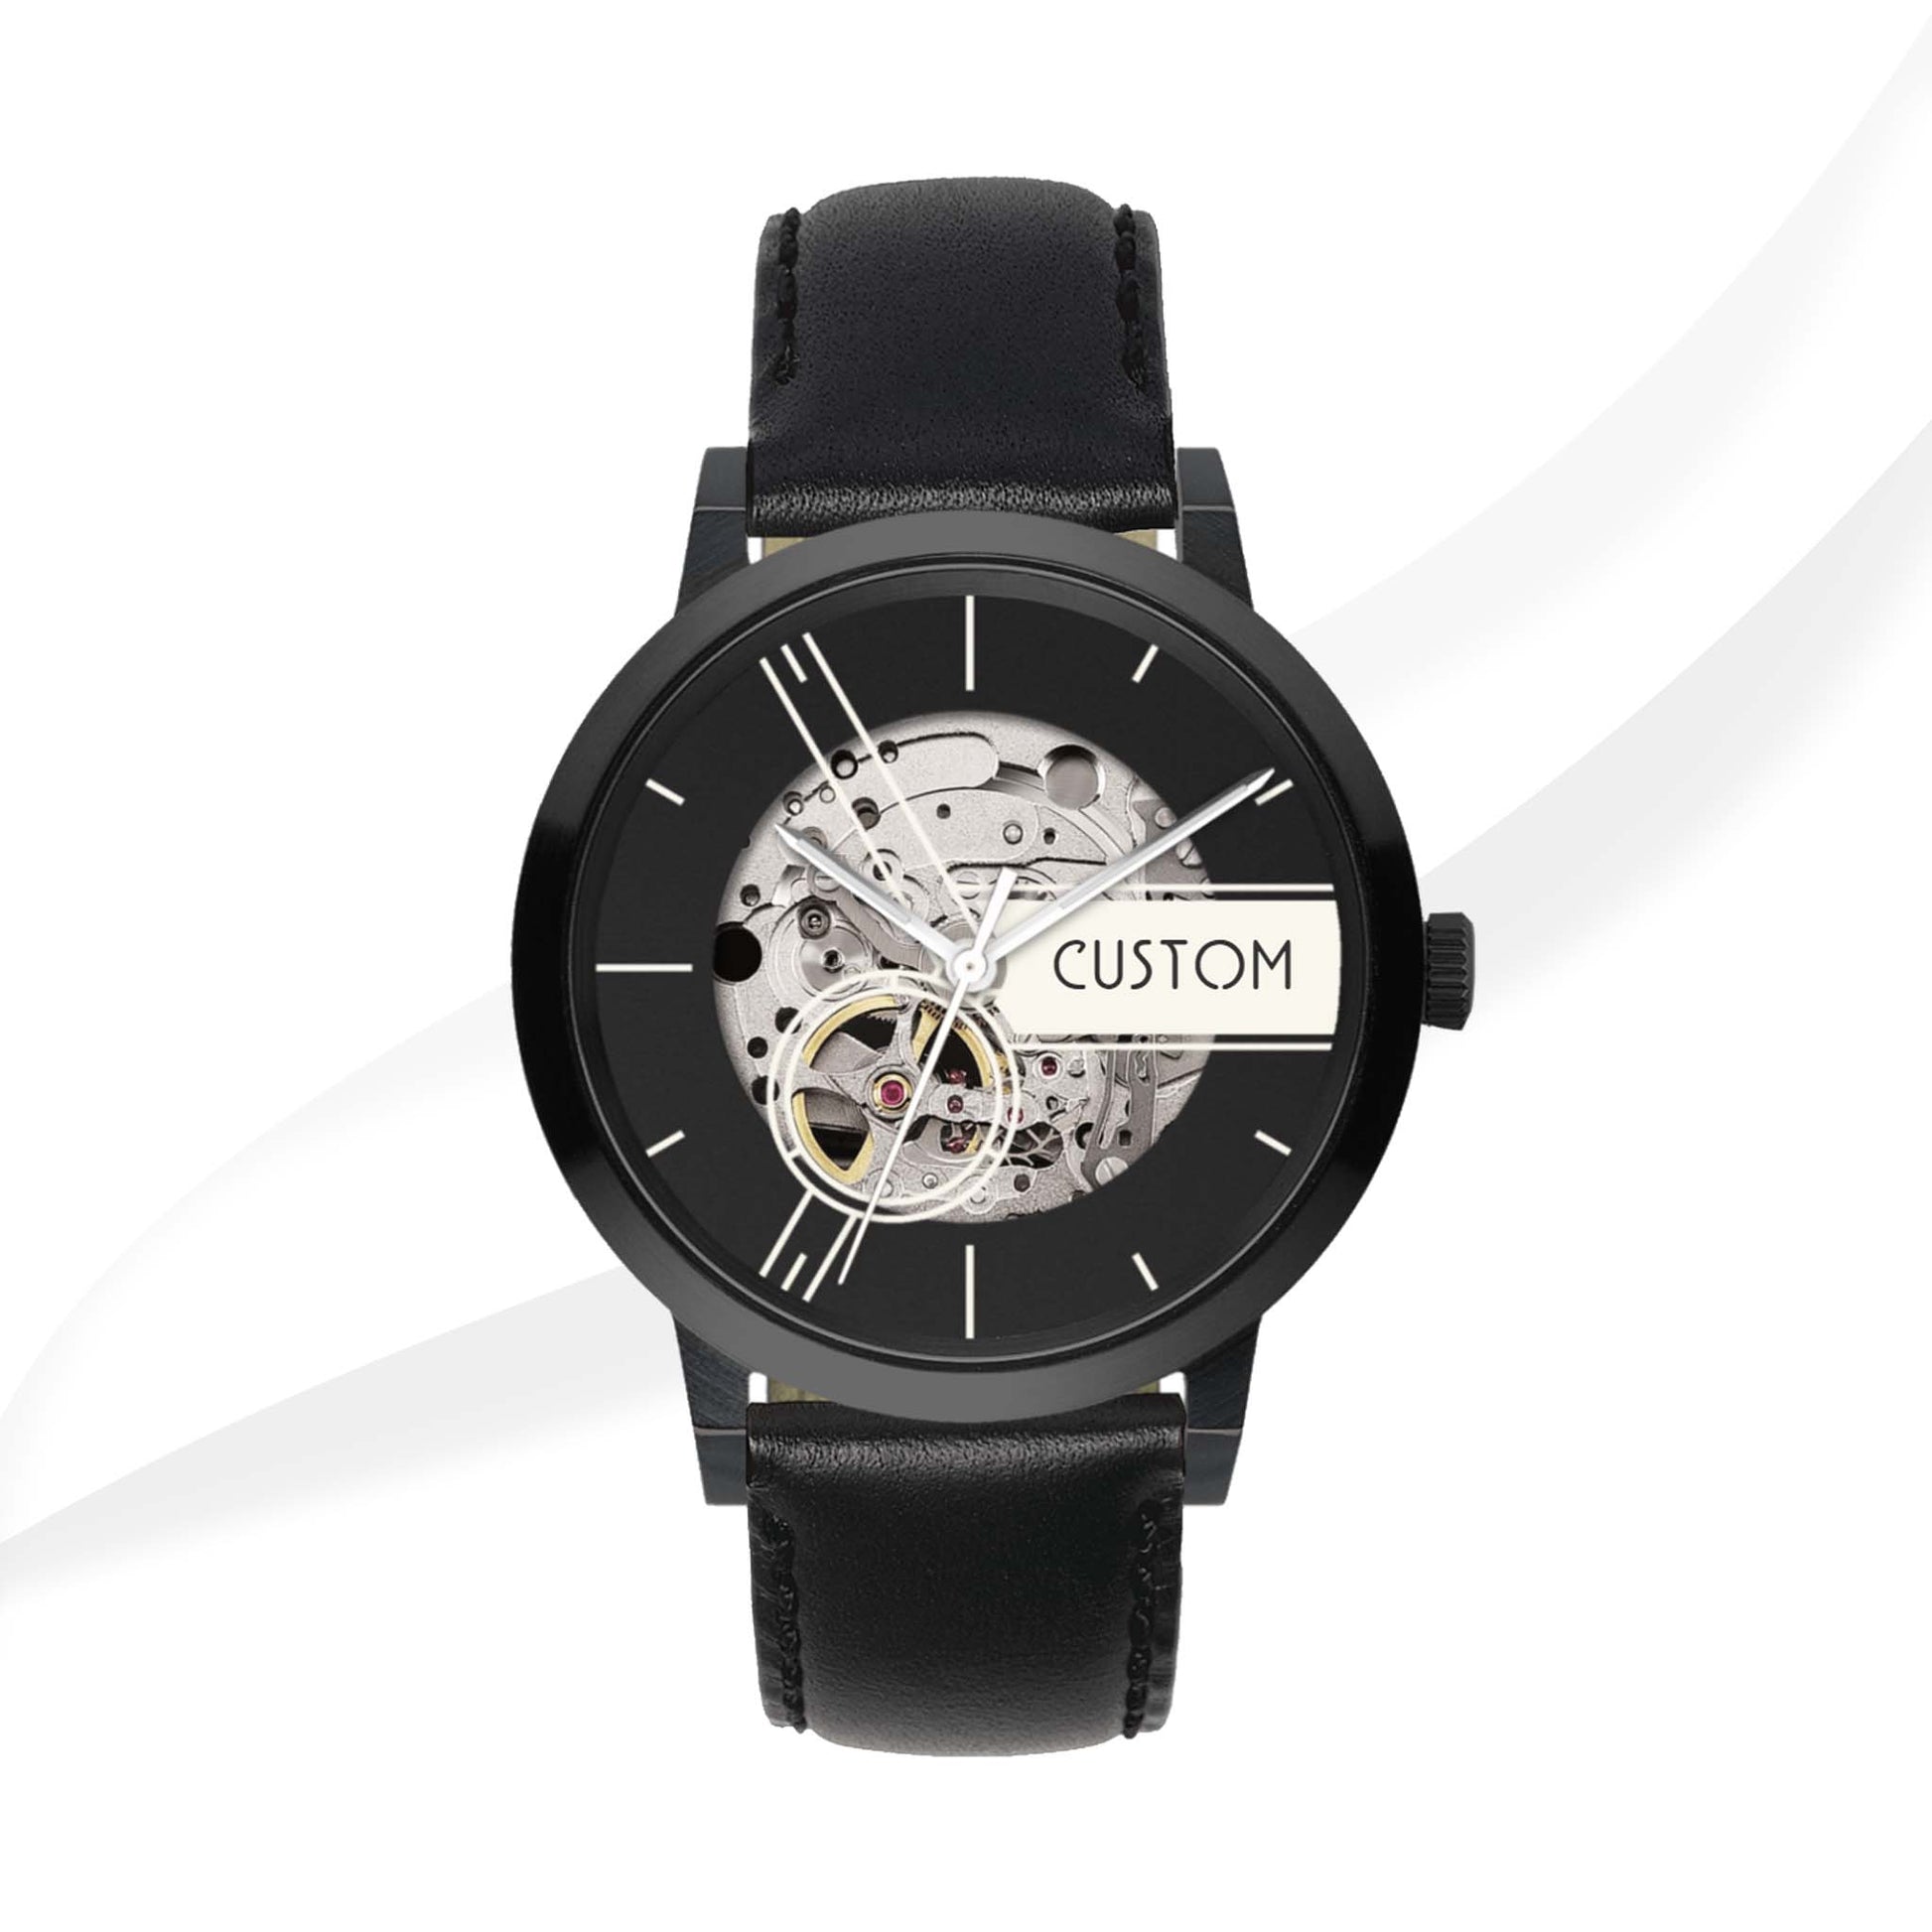 EONIQ custom skeleton watch - black leather